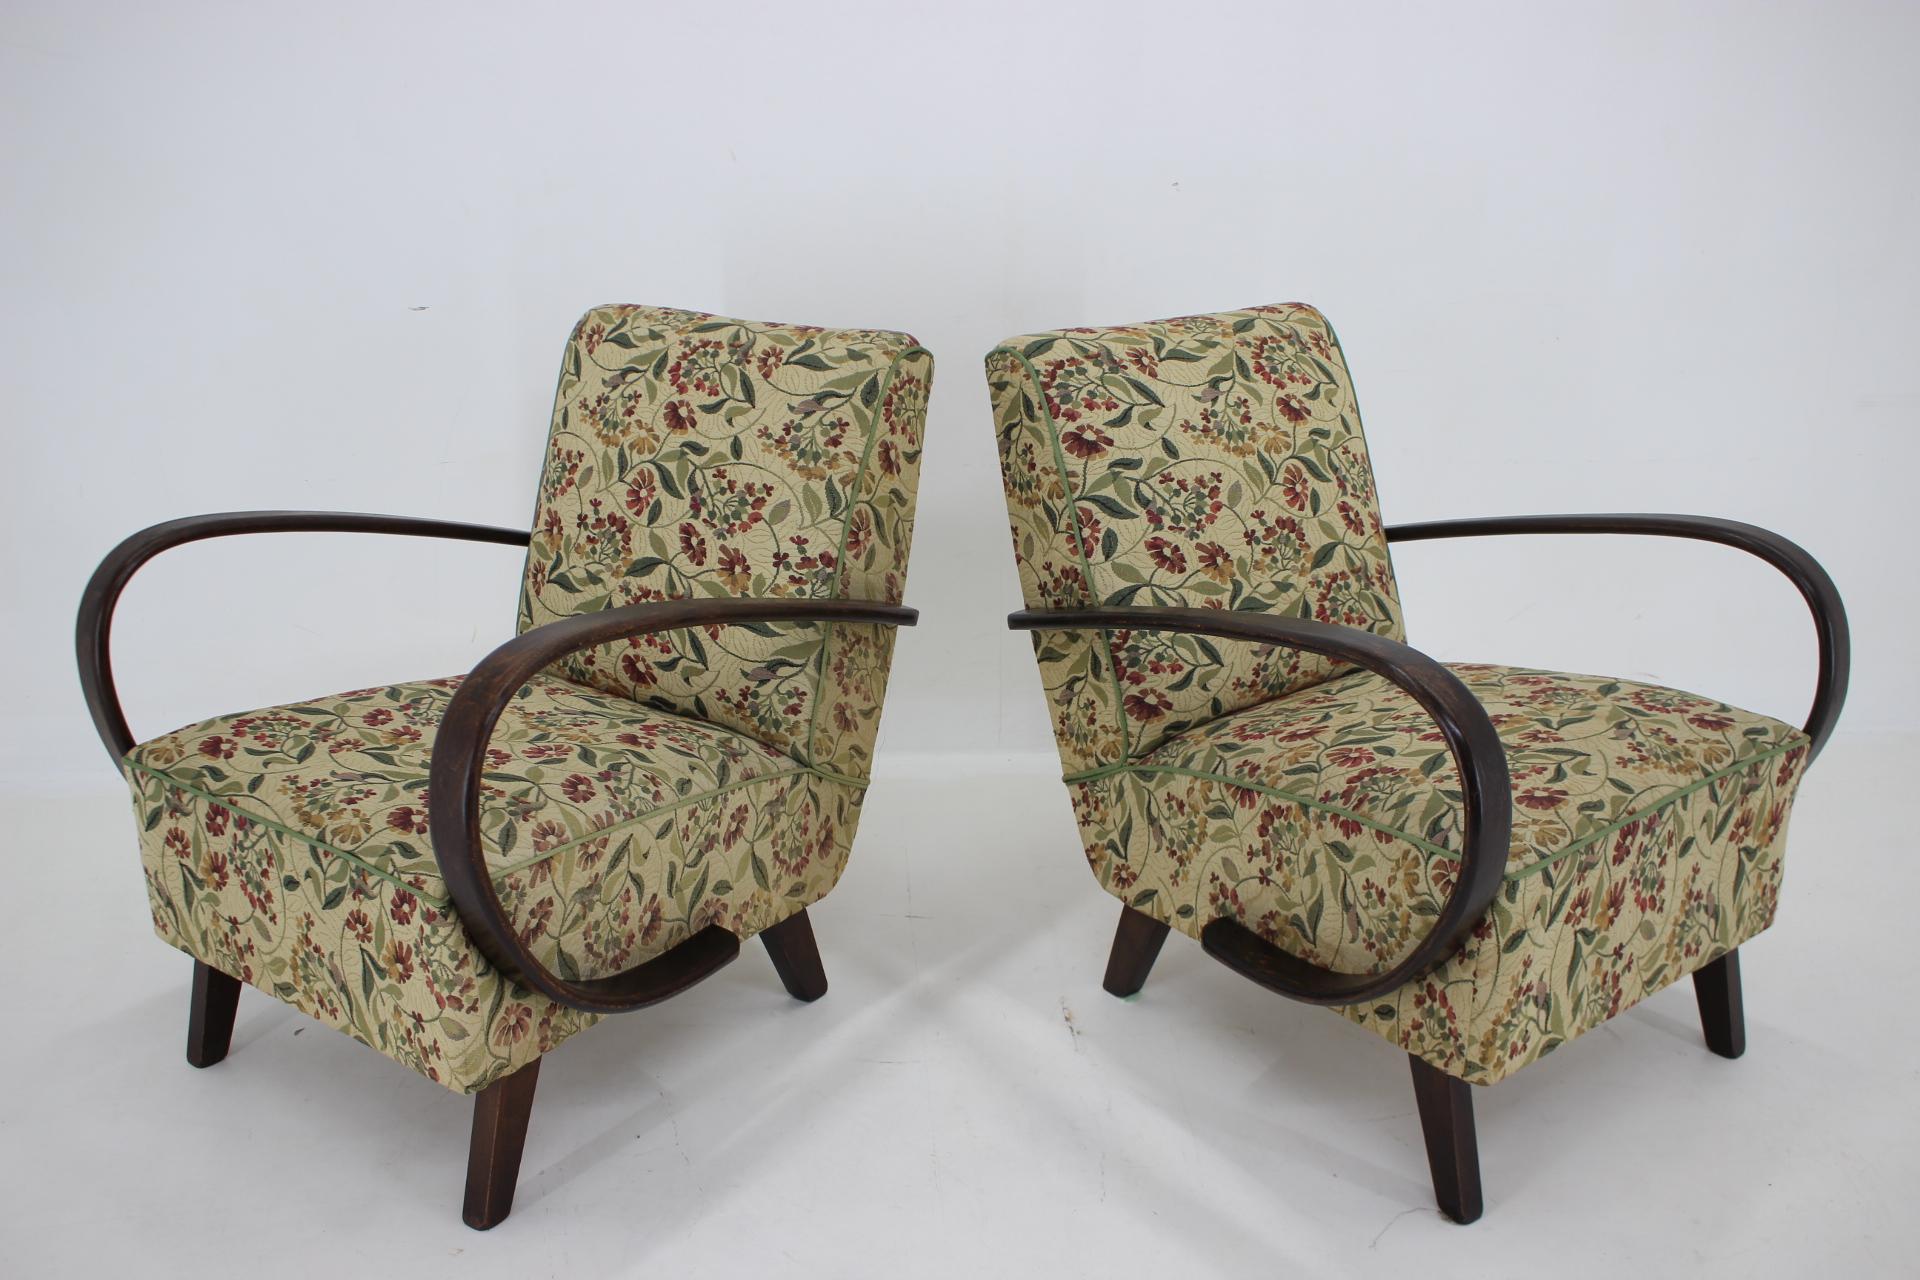 Fabric 1950s Jindrich Halabala Set of Two Armchairs, Czechoslovakia